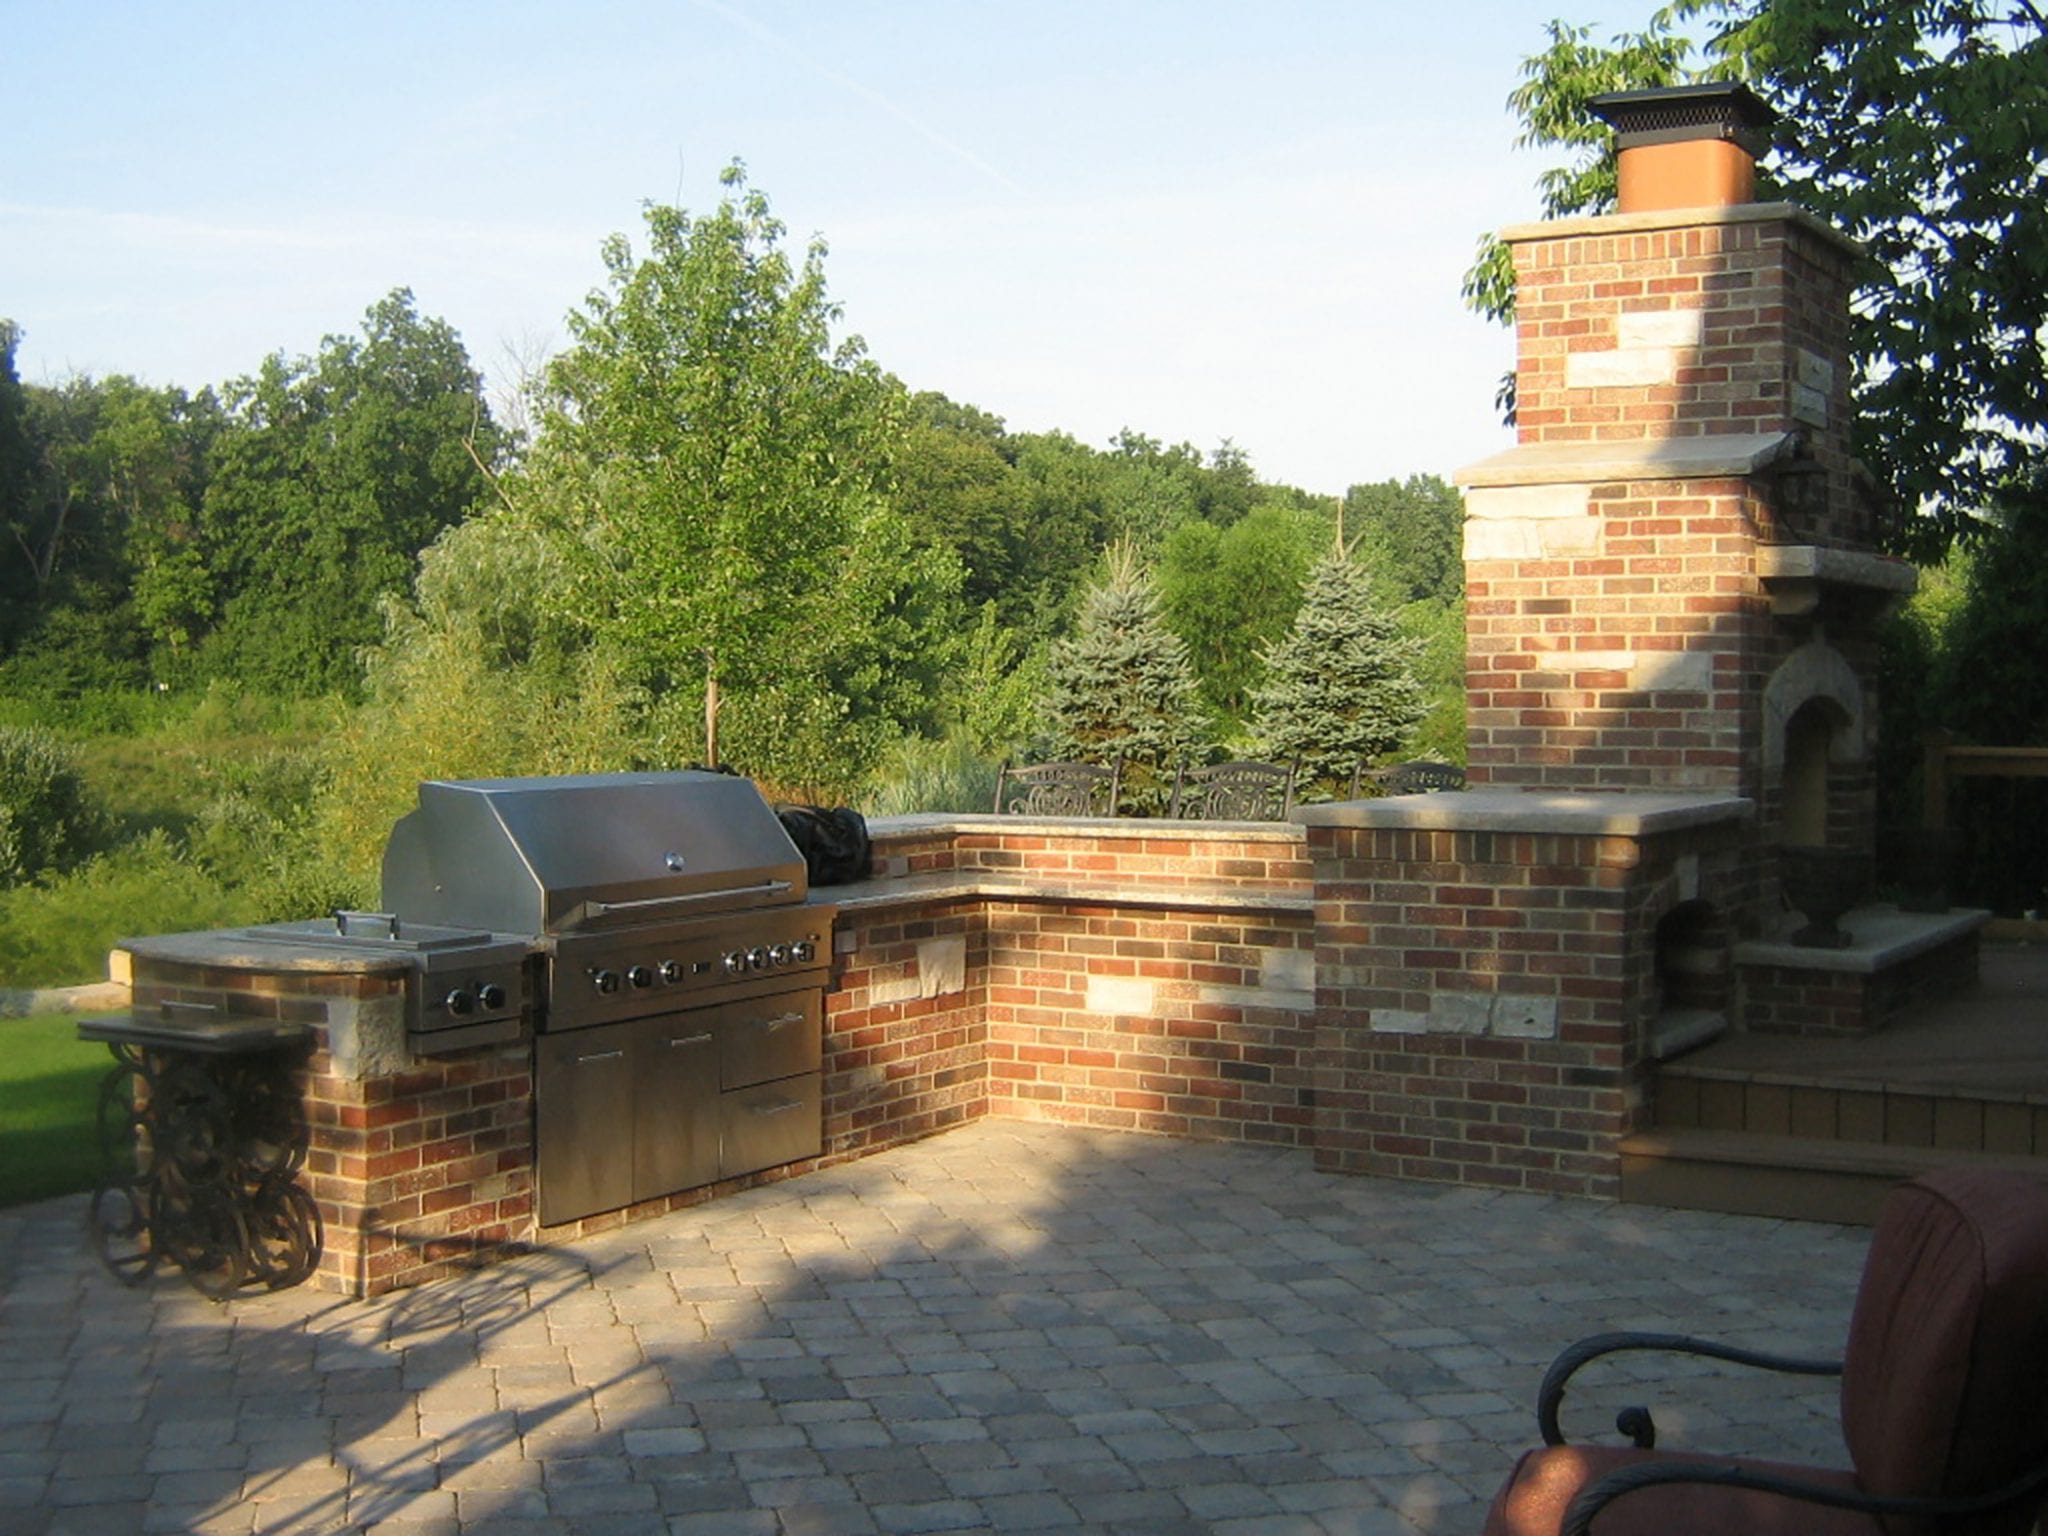 brick kitchen and fireplace in backyard